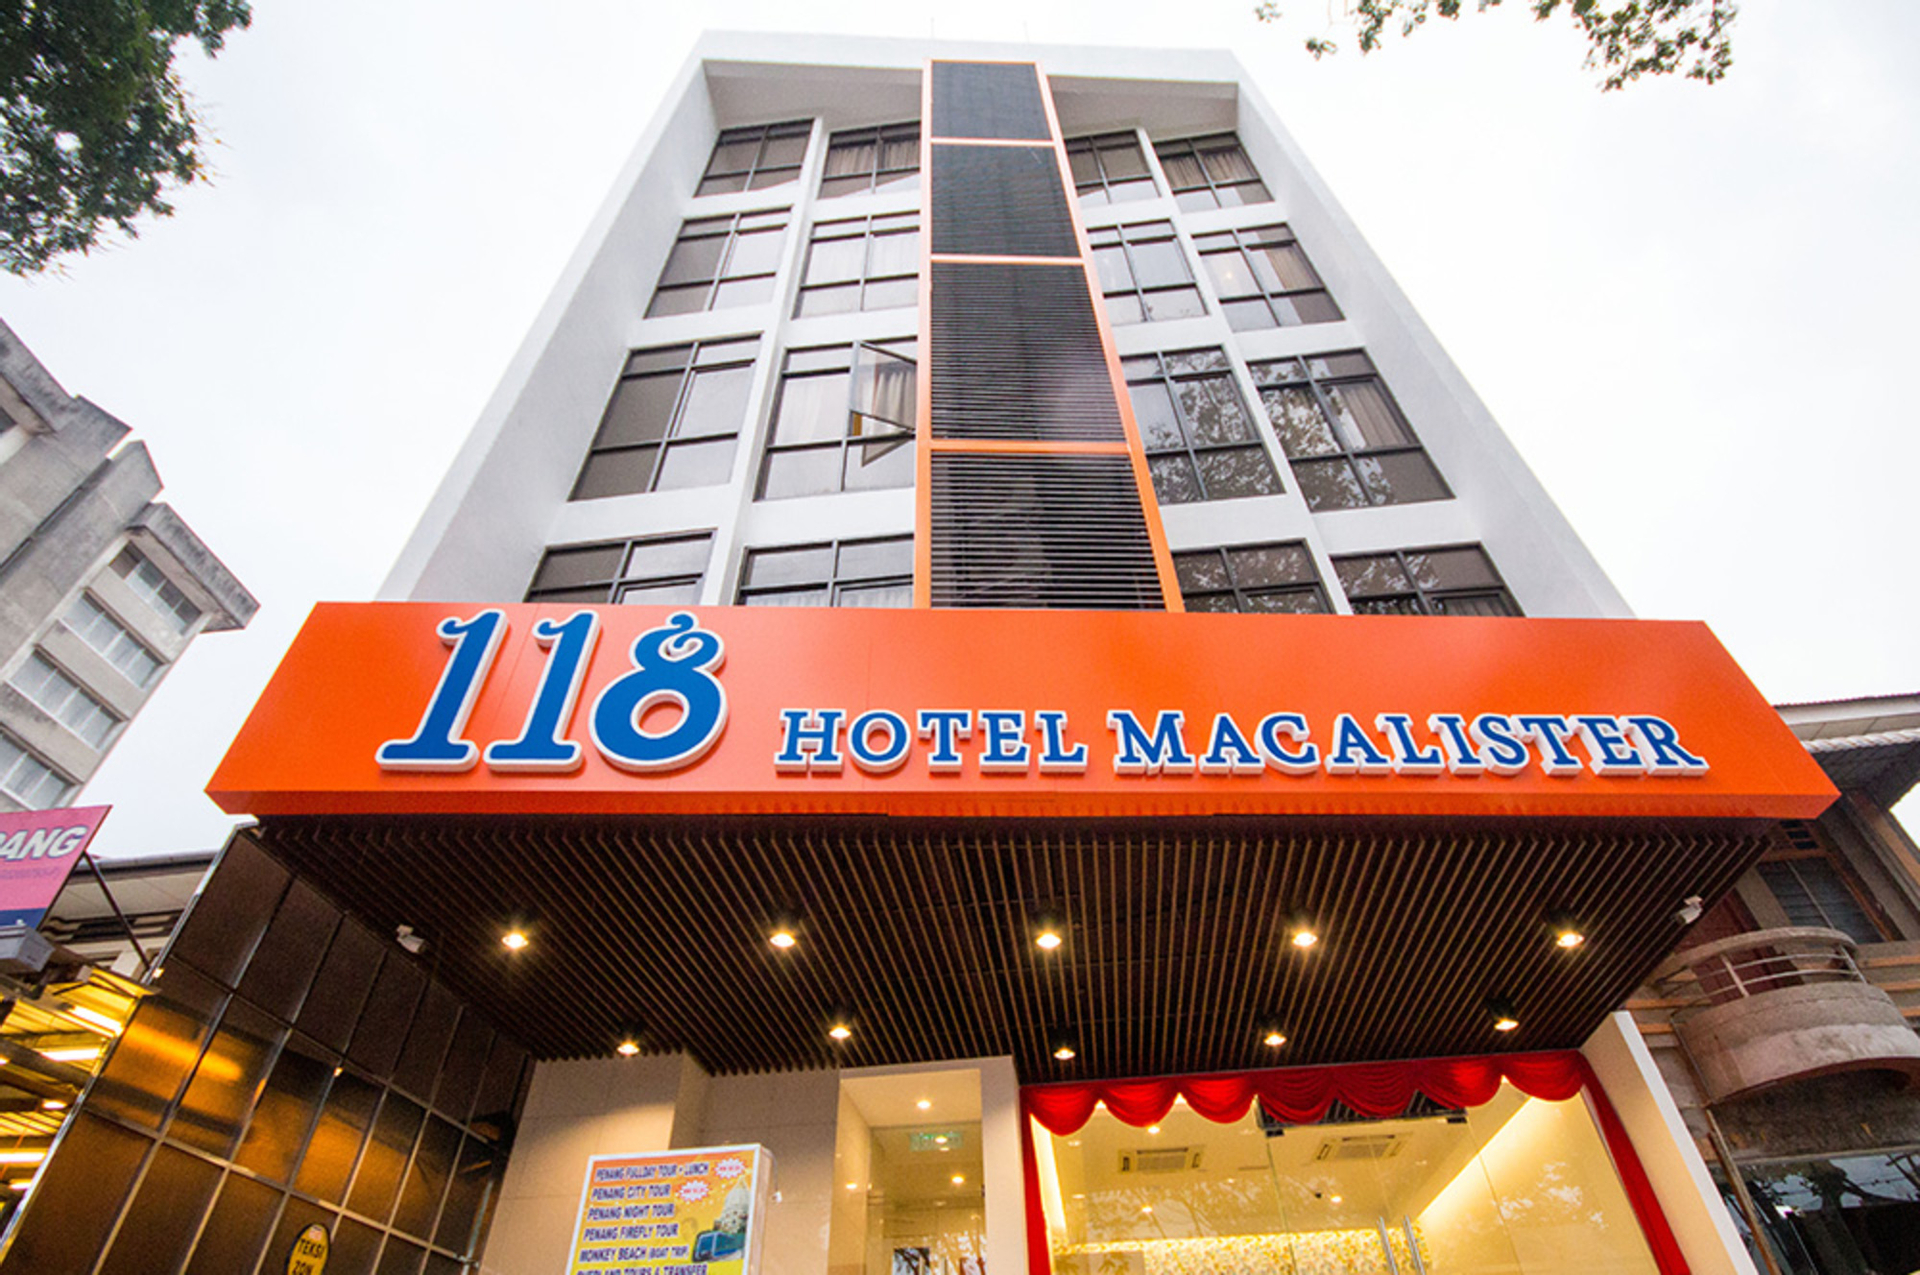 Exterior & Views 1, 118 Hotel Macalister, Pulau Penang